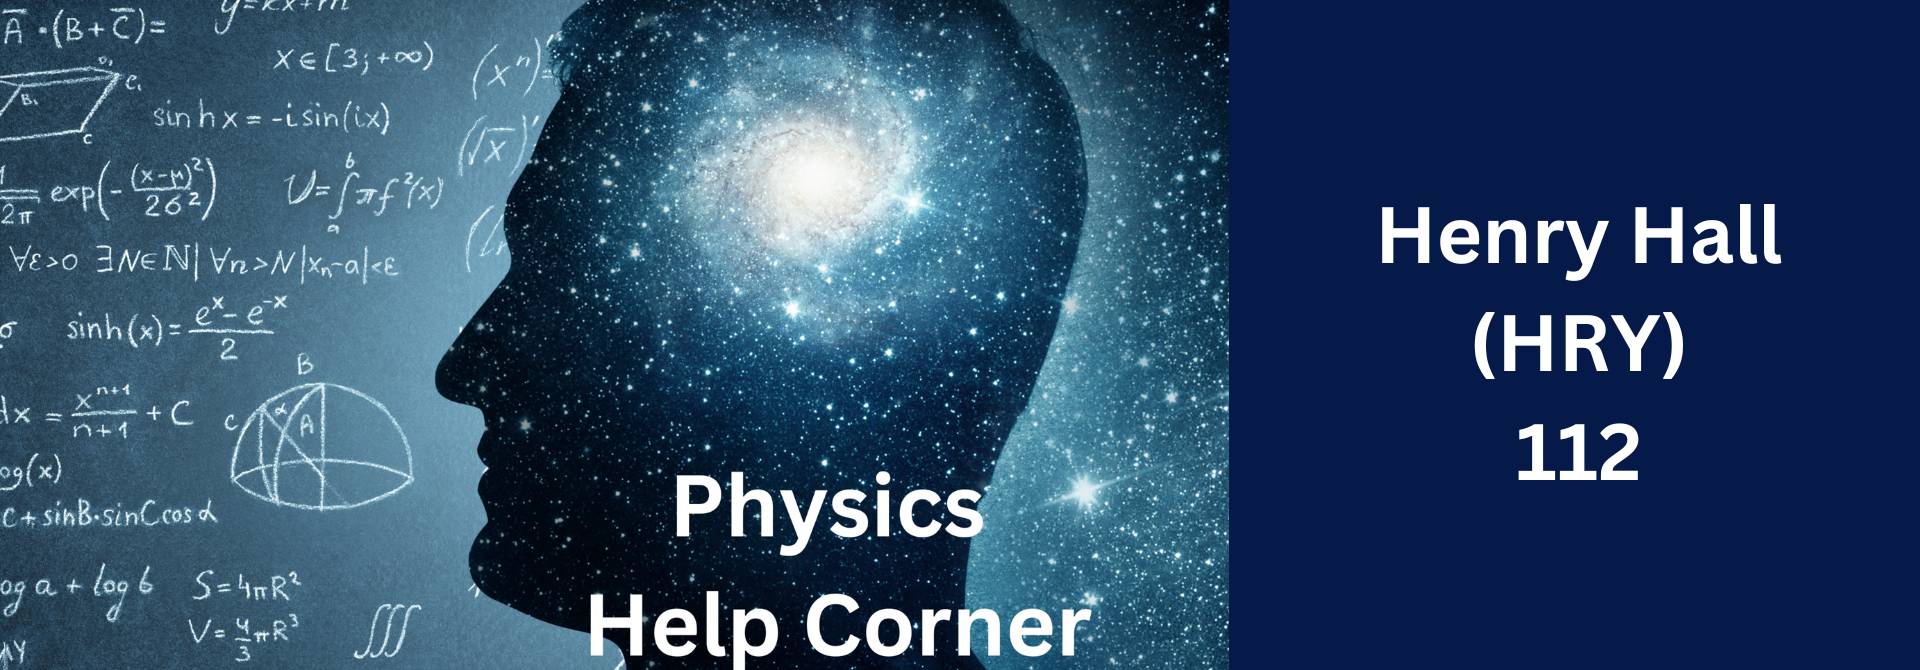 Physics Help Corner: Henry Hall (HRY) 112